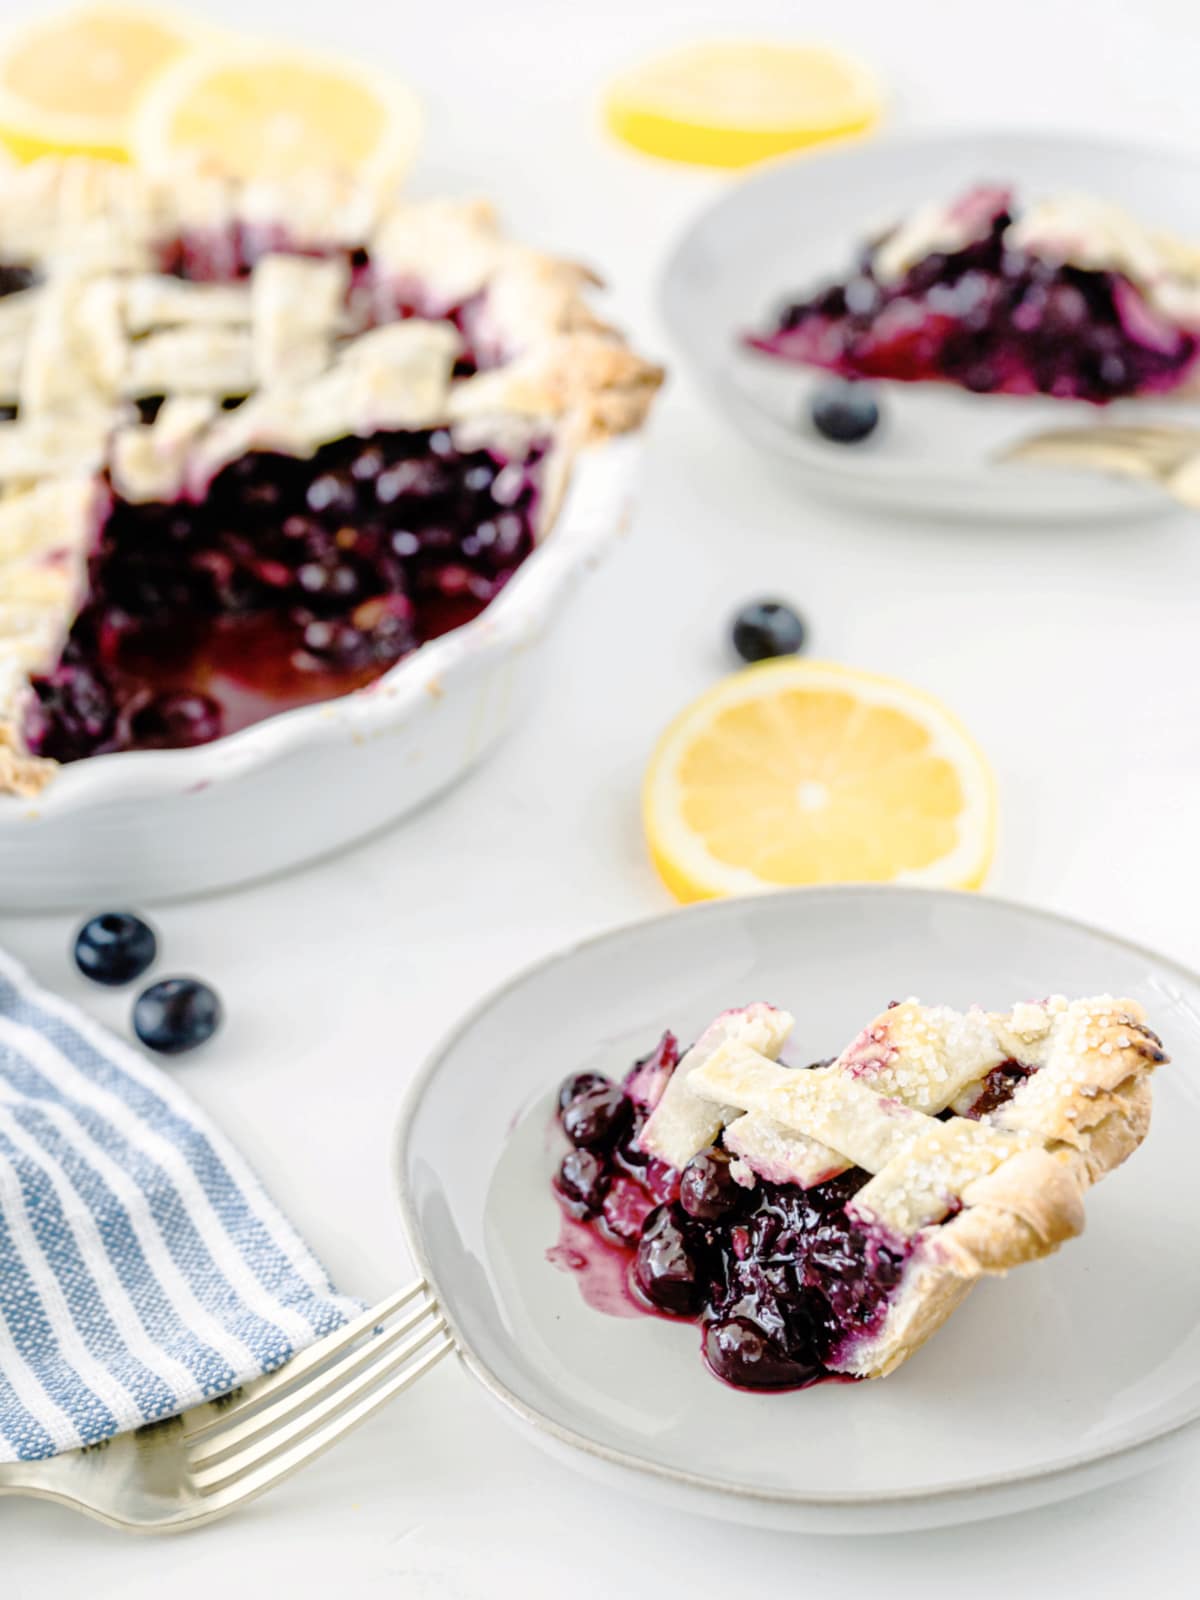 Blueberry pie slices on plates